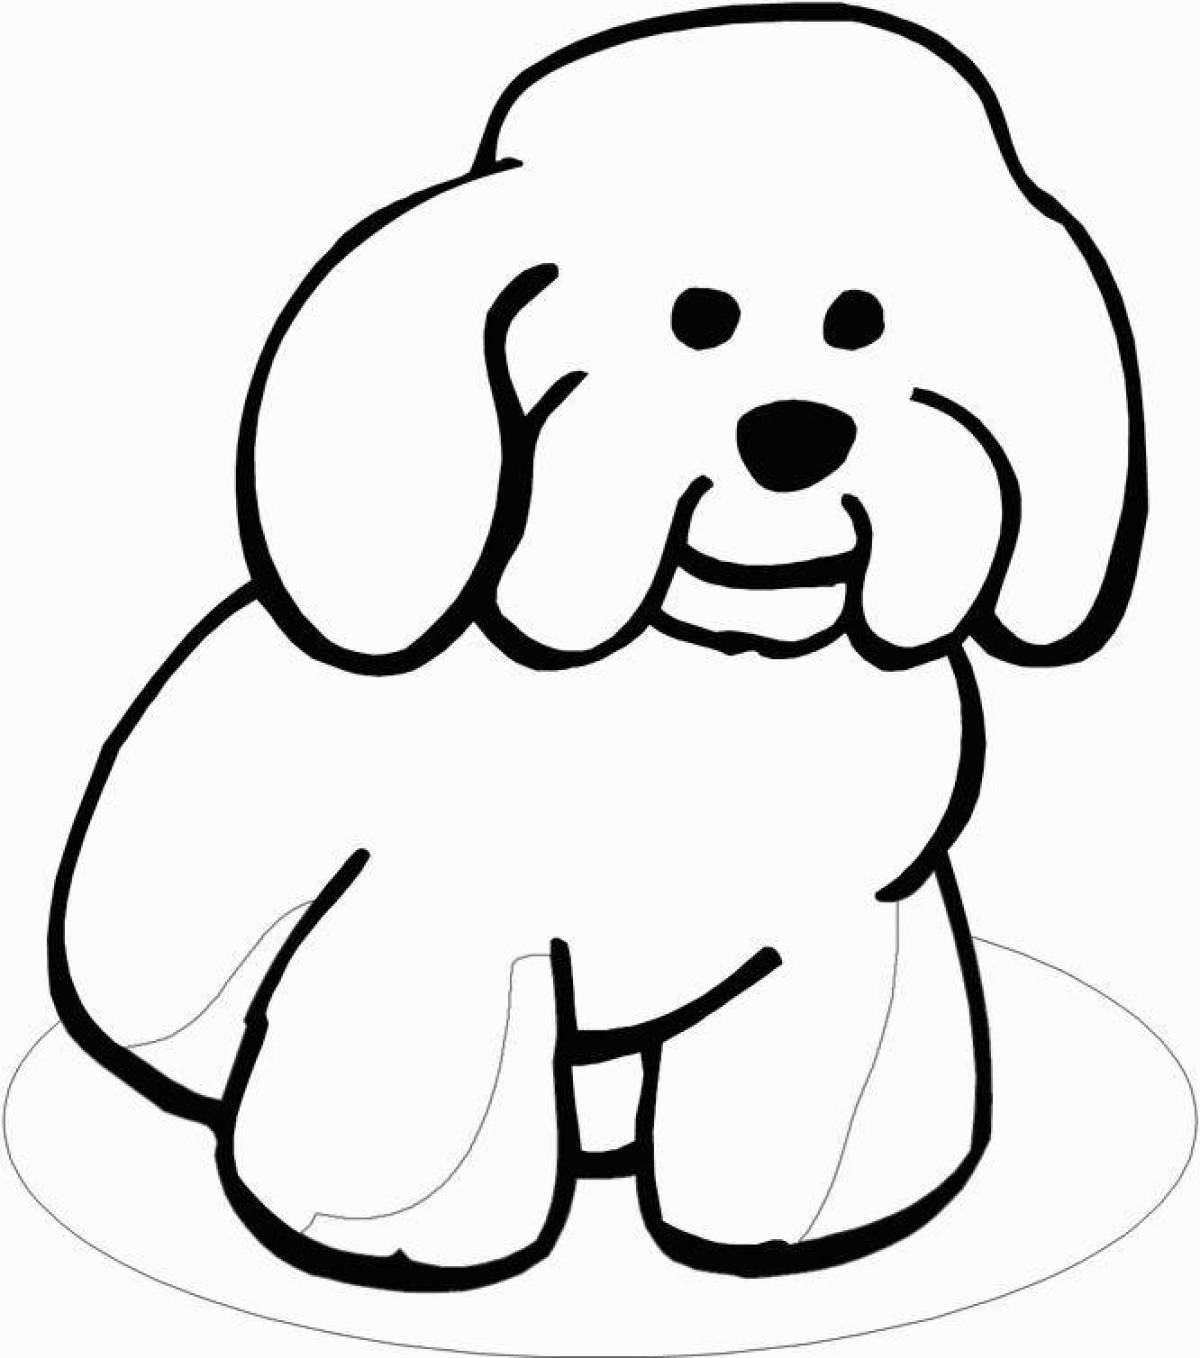 Loving dog coloring book for kids